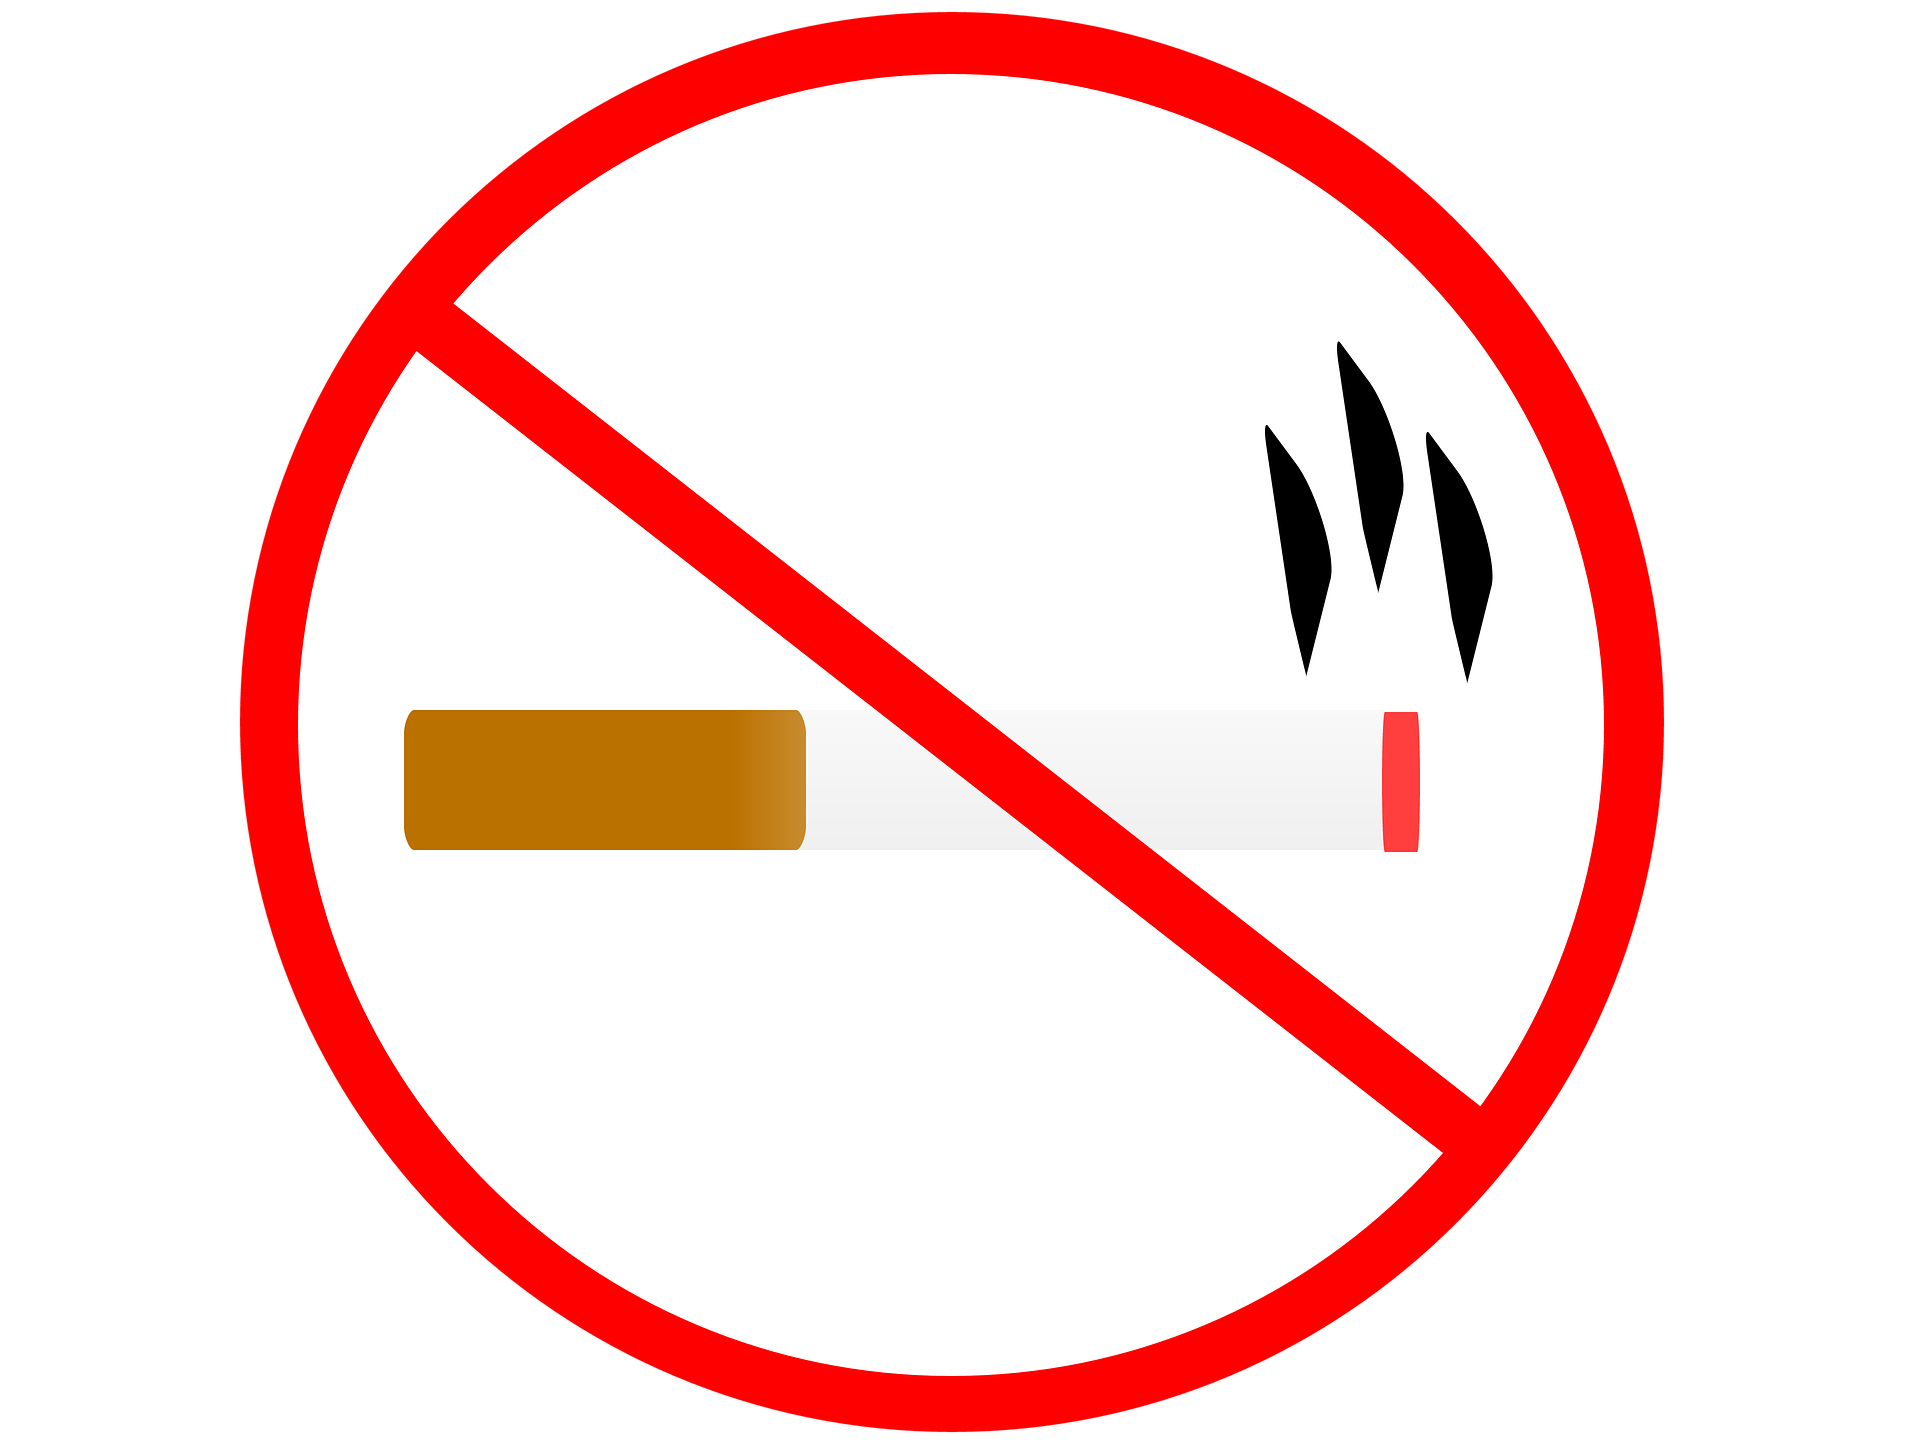 Cigarette no smoking sign